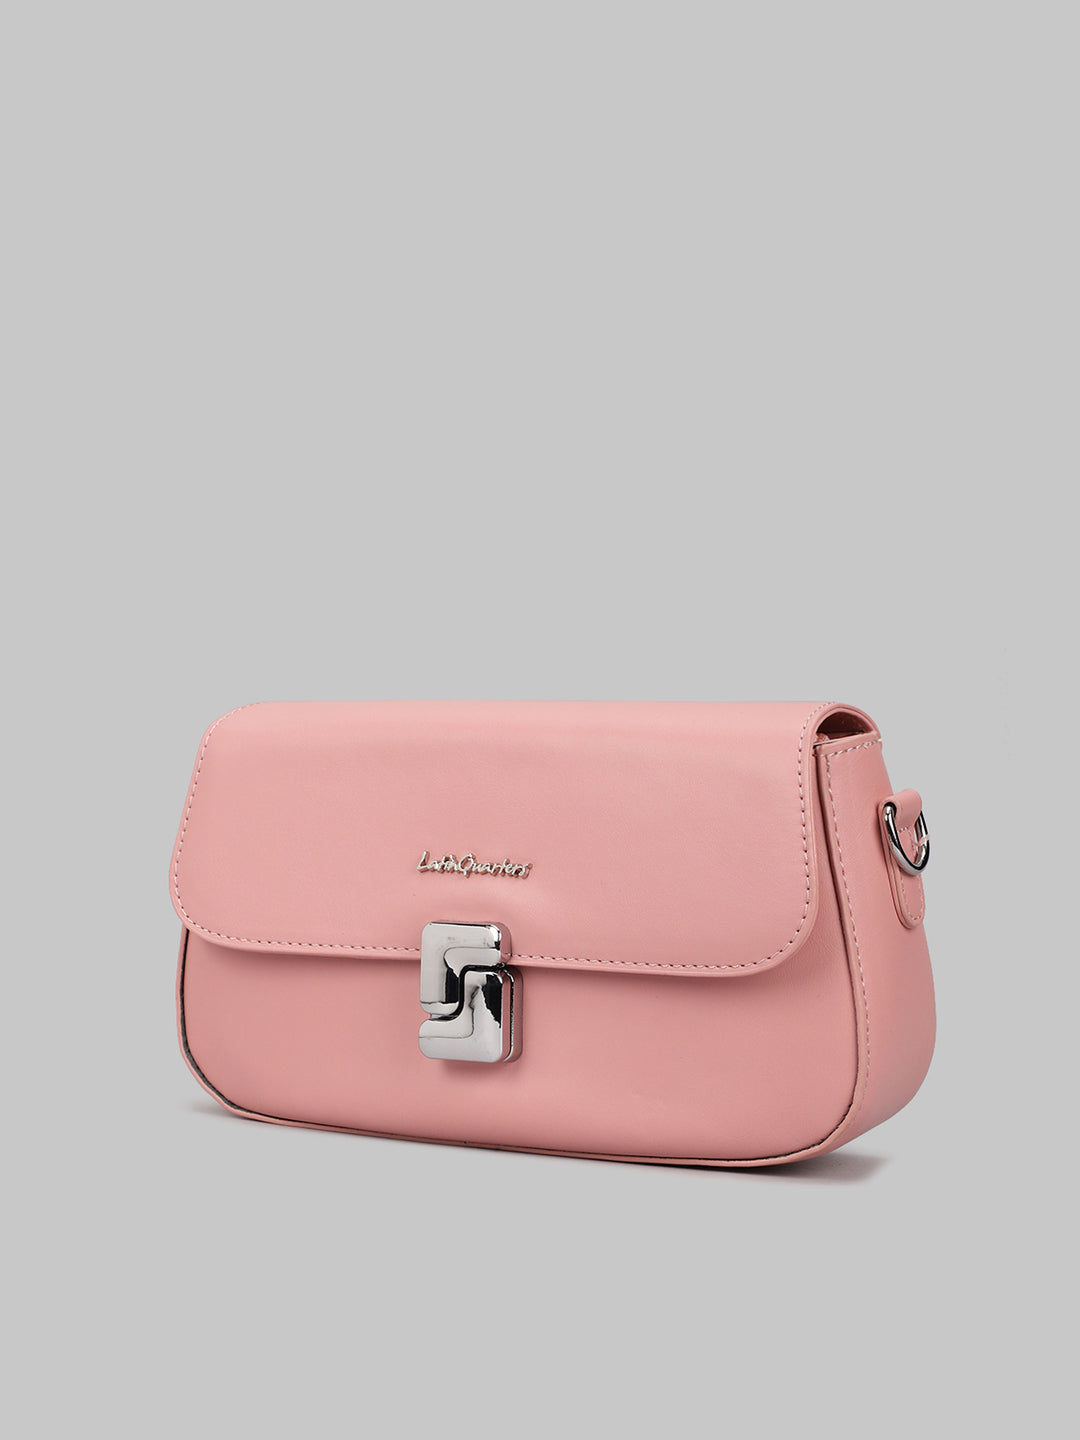 Pink Clutch Bag For Women